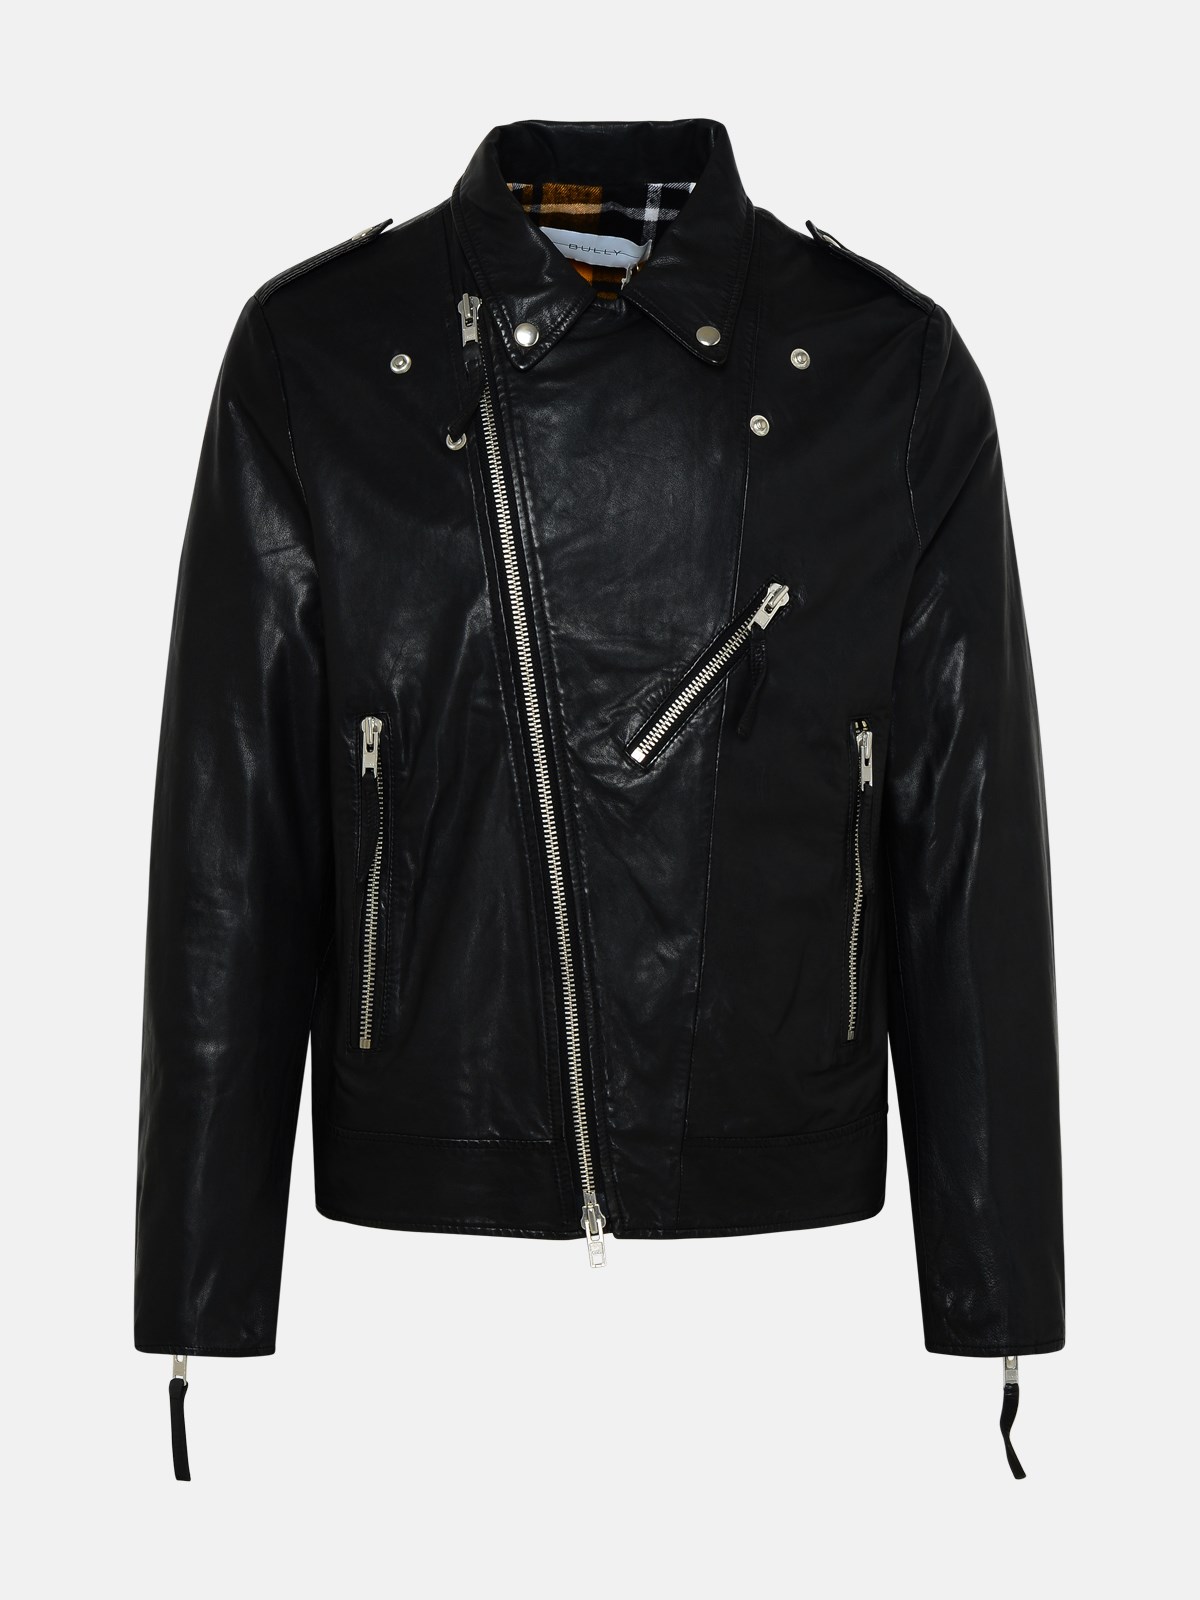 Bully Kids' Black Genuine Leather Jacket